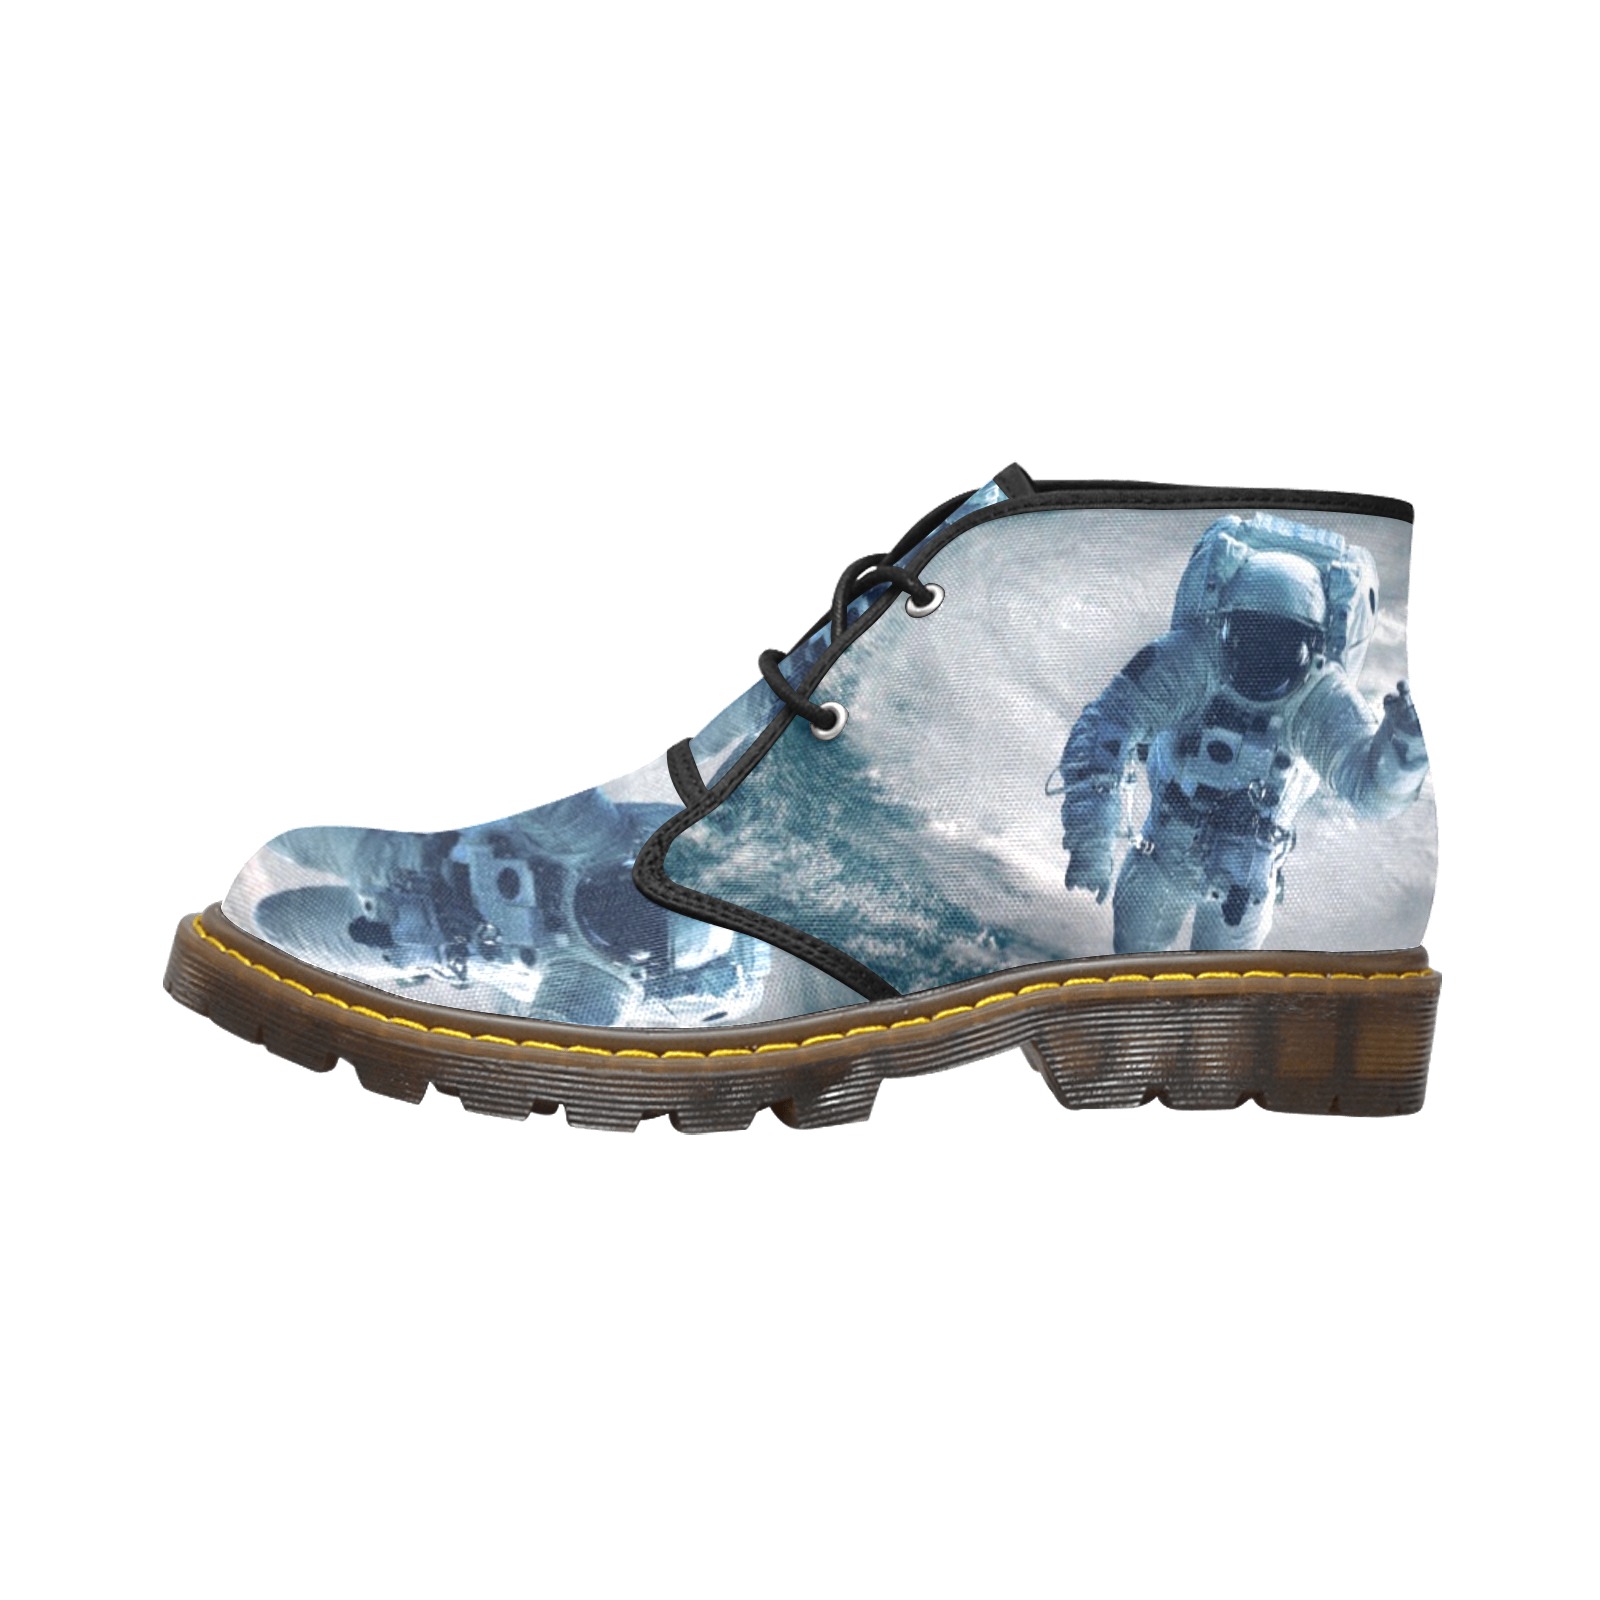 CLOUDS 5 ASTRONAUT Men's Canvas Chukka Boots (Model 2402-1)